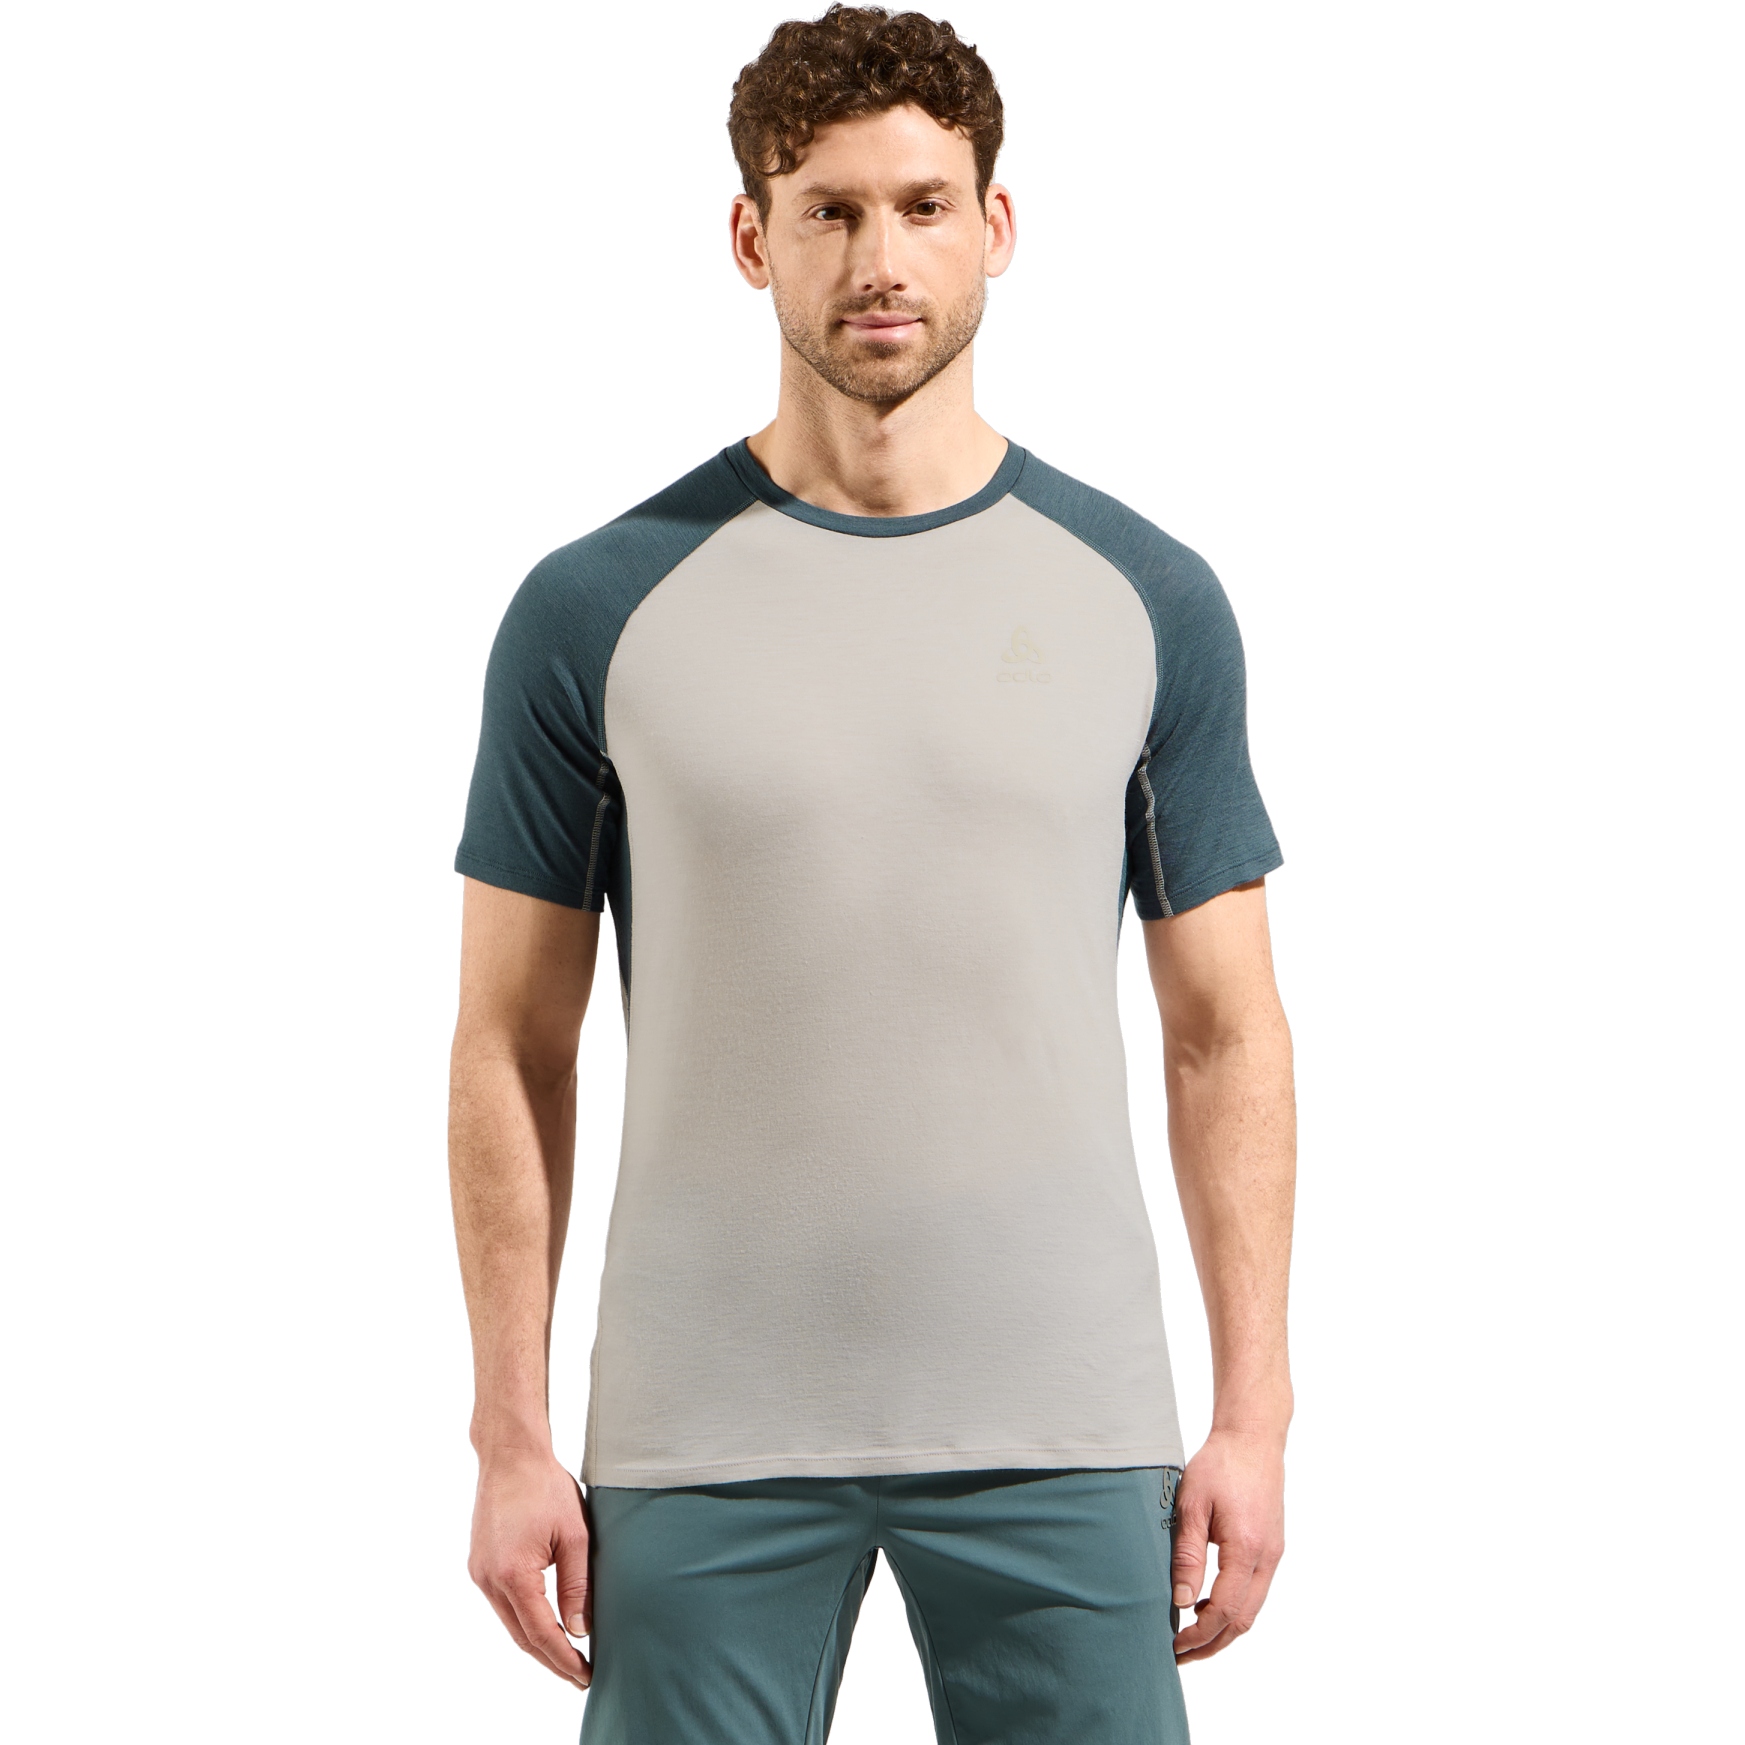 Bild von Odlo Ascent Performance Wool 125 T-Shirt Herren - silver cloud - dark slate